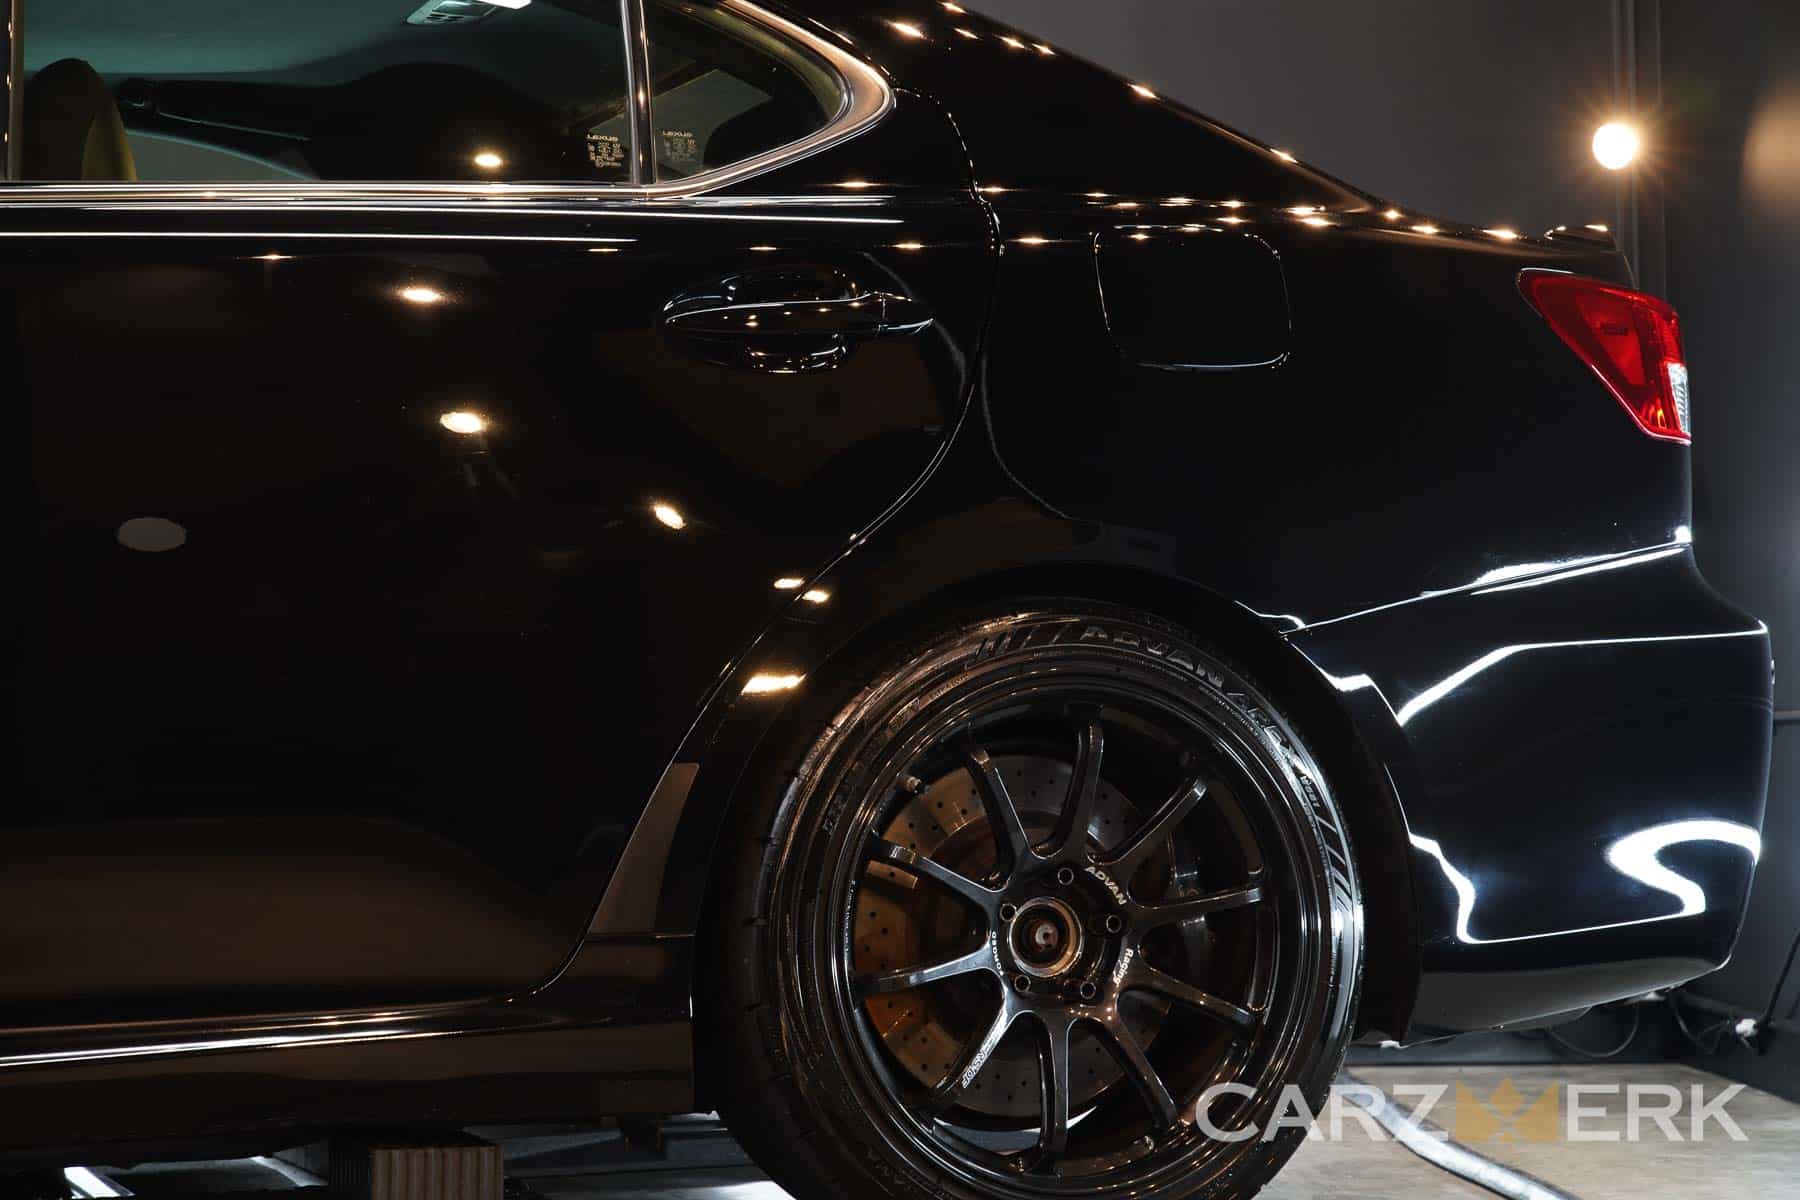 Lexus ISF Black Obsidian Black with Advan RS-DF Rear wheels and Yokohama Advan Apex Tires